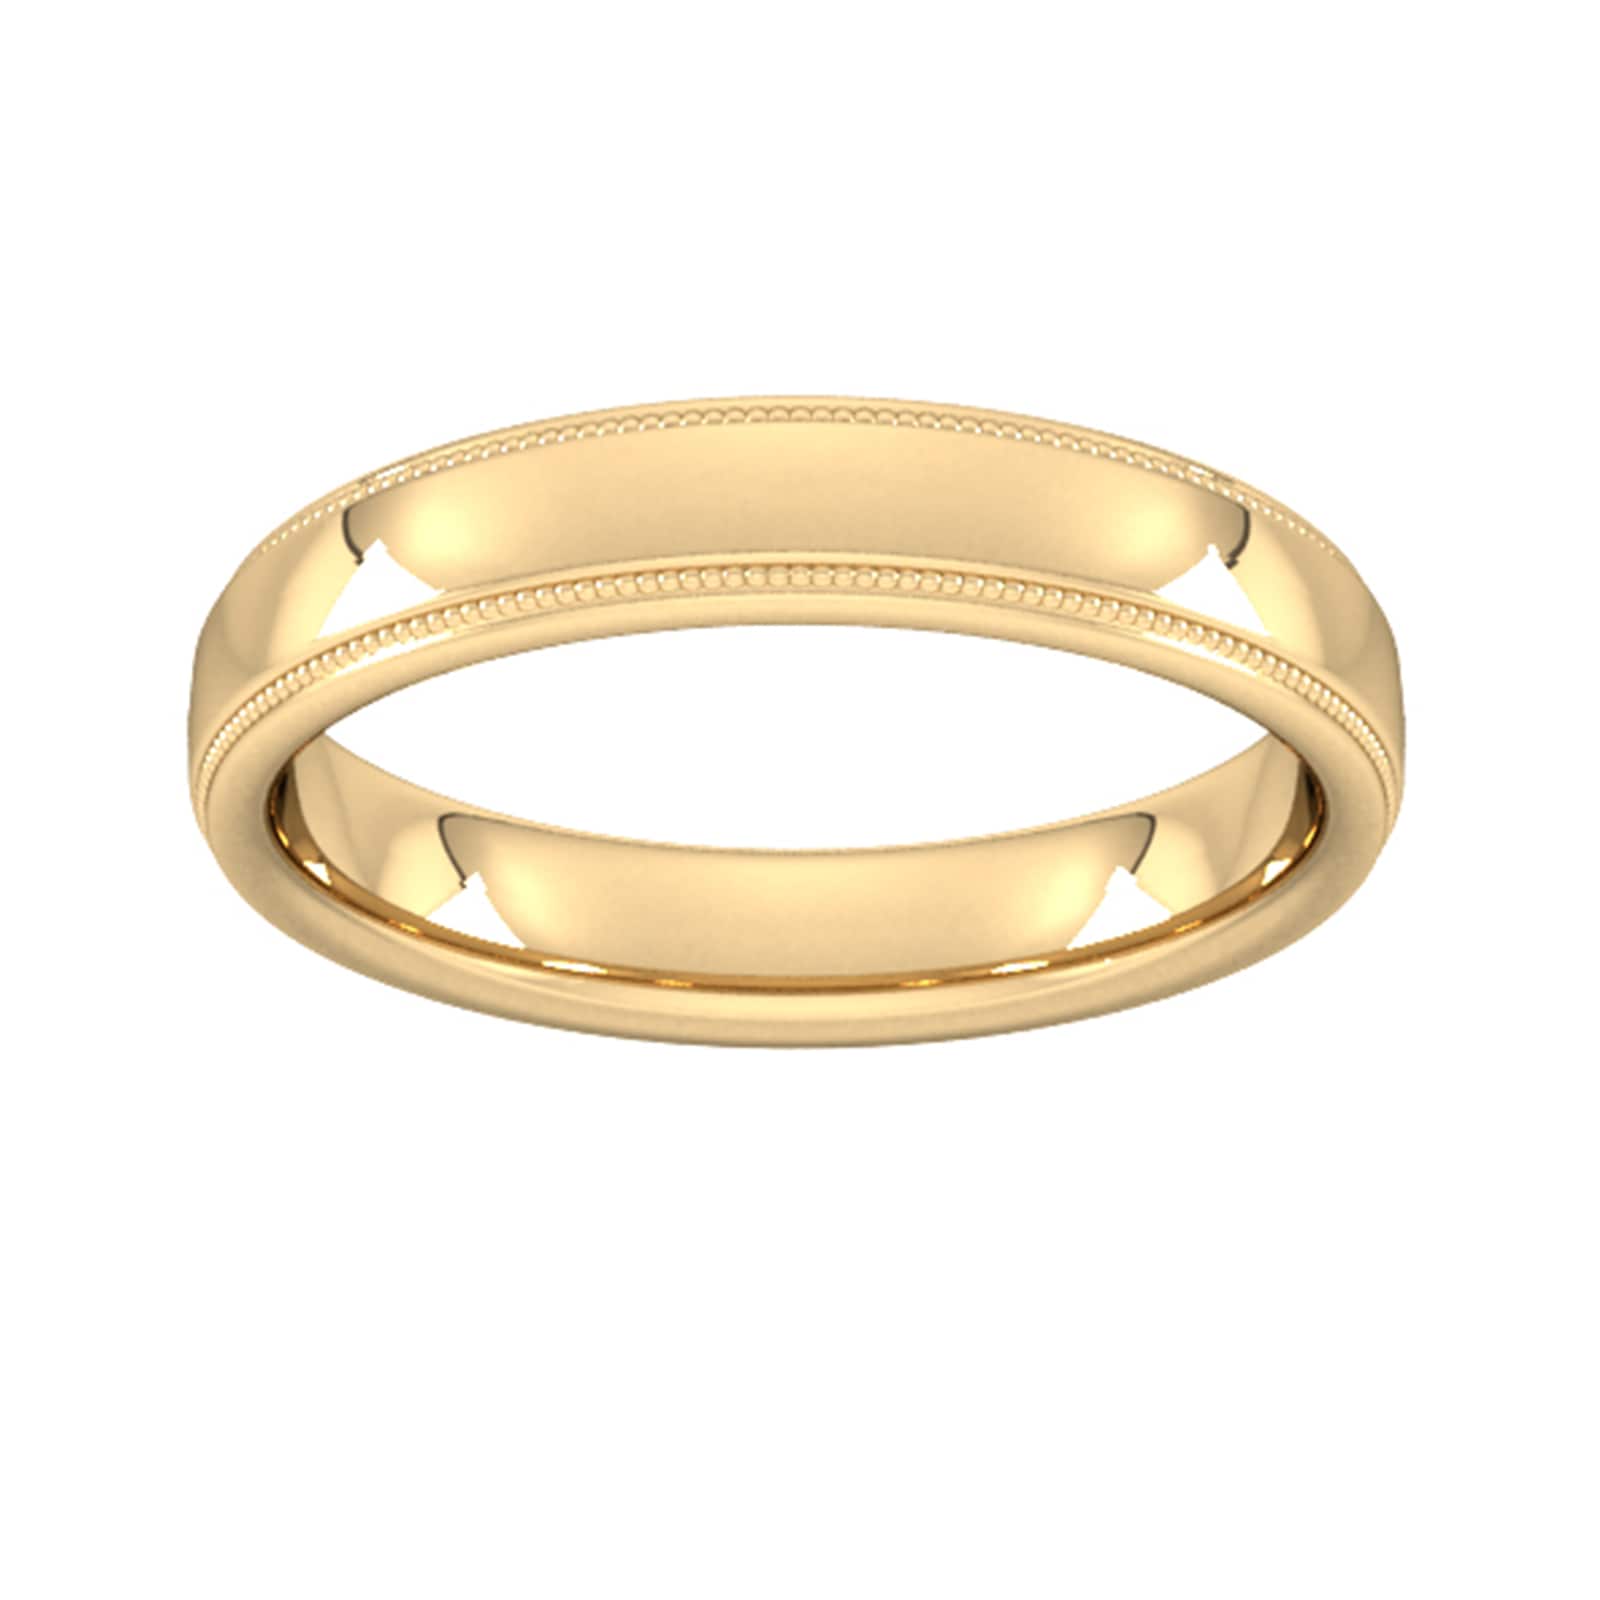 4mm Flat Court Heavy Milgrain Edge Wedding Ring In 18 Carat Yellow Gold - Ring Size G